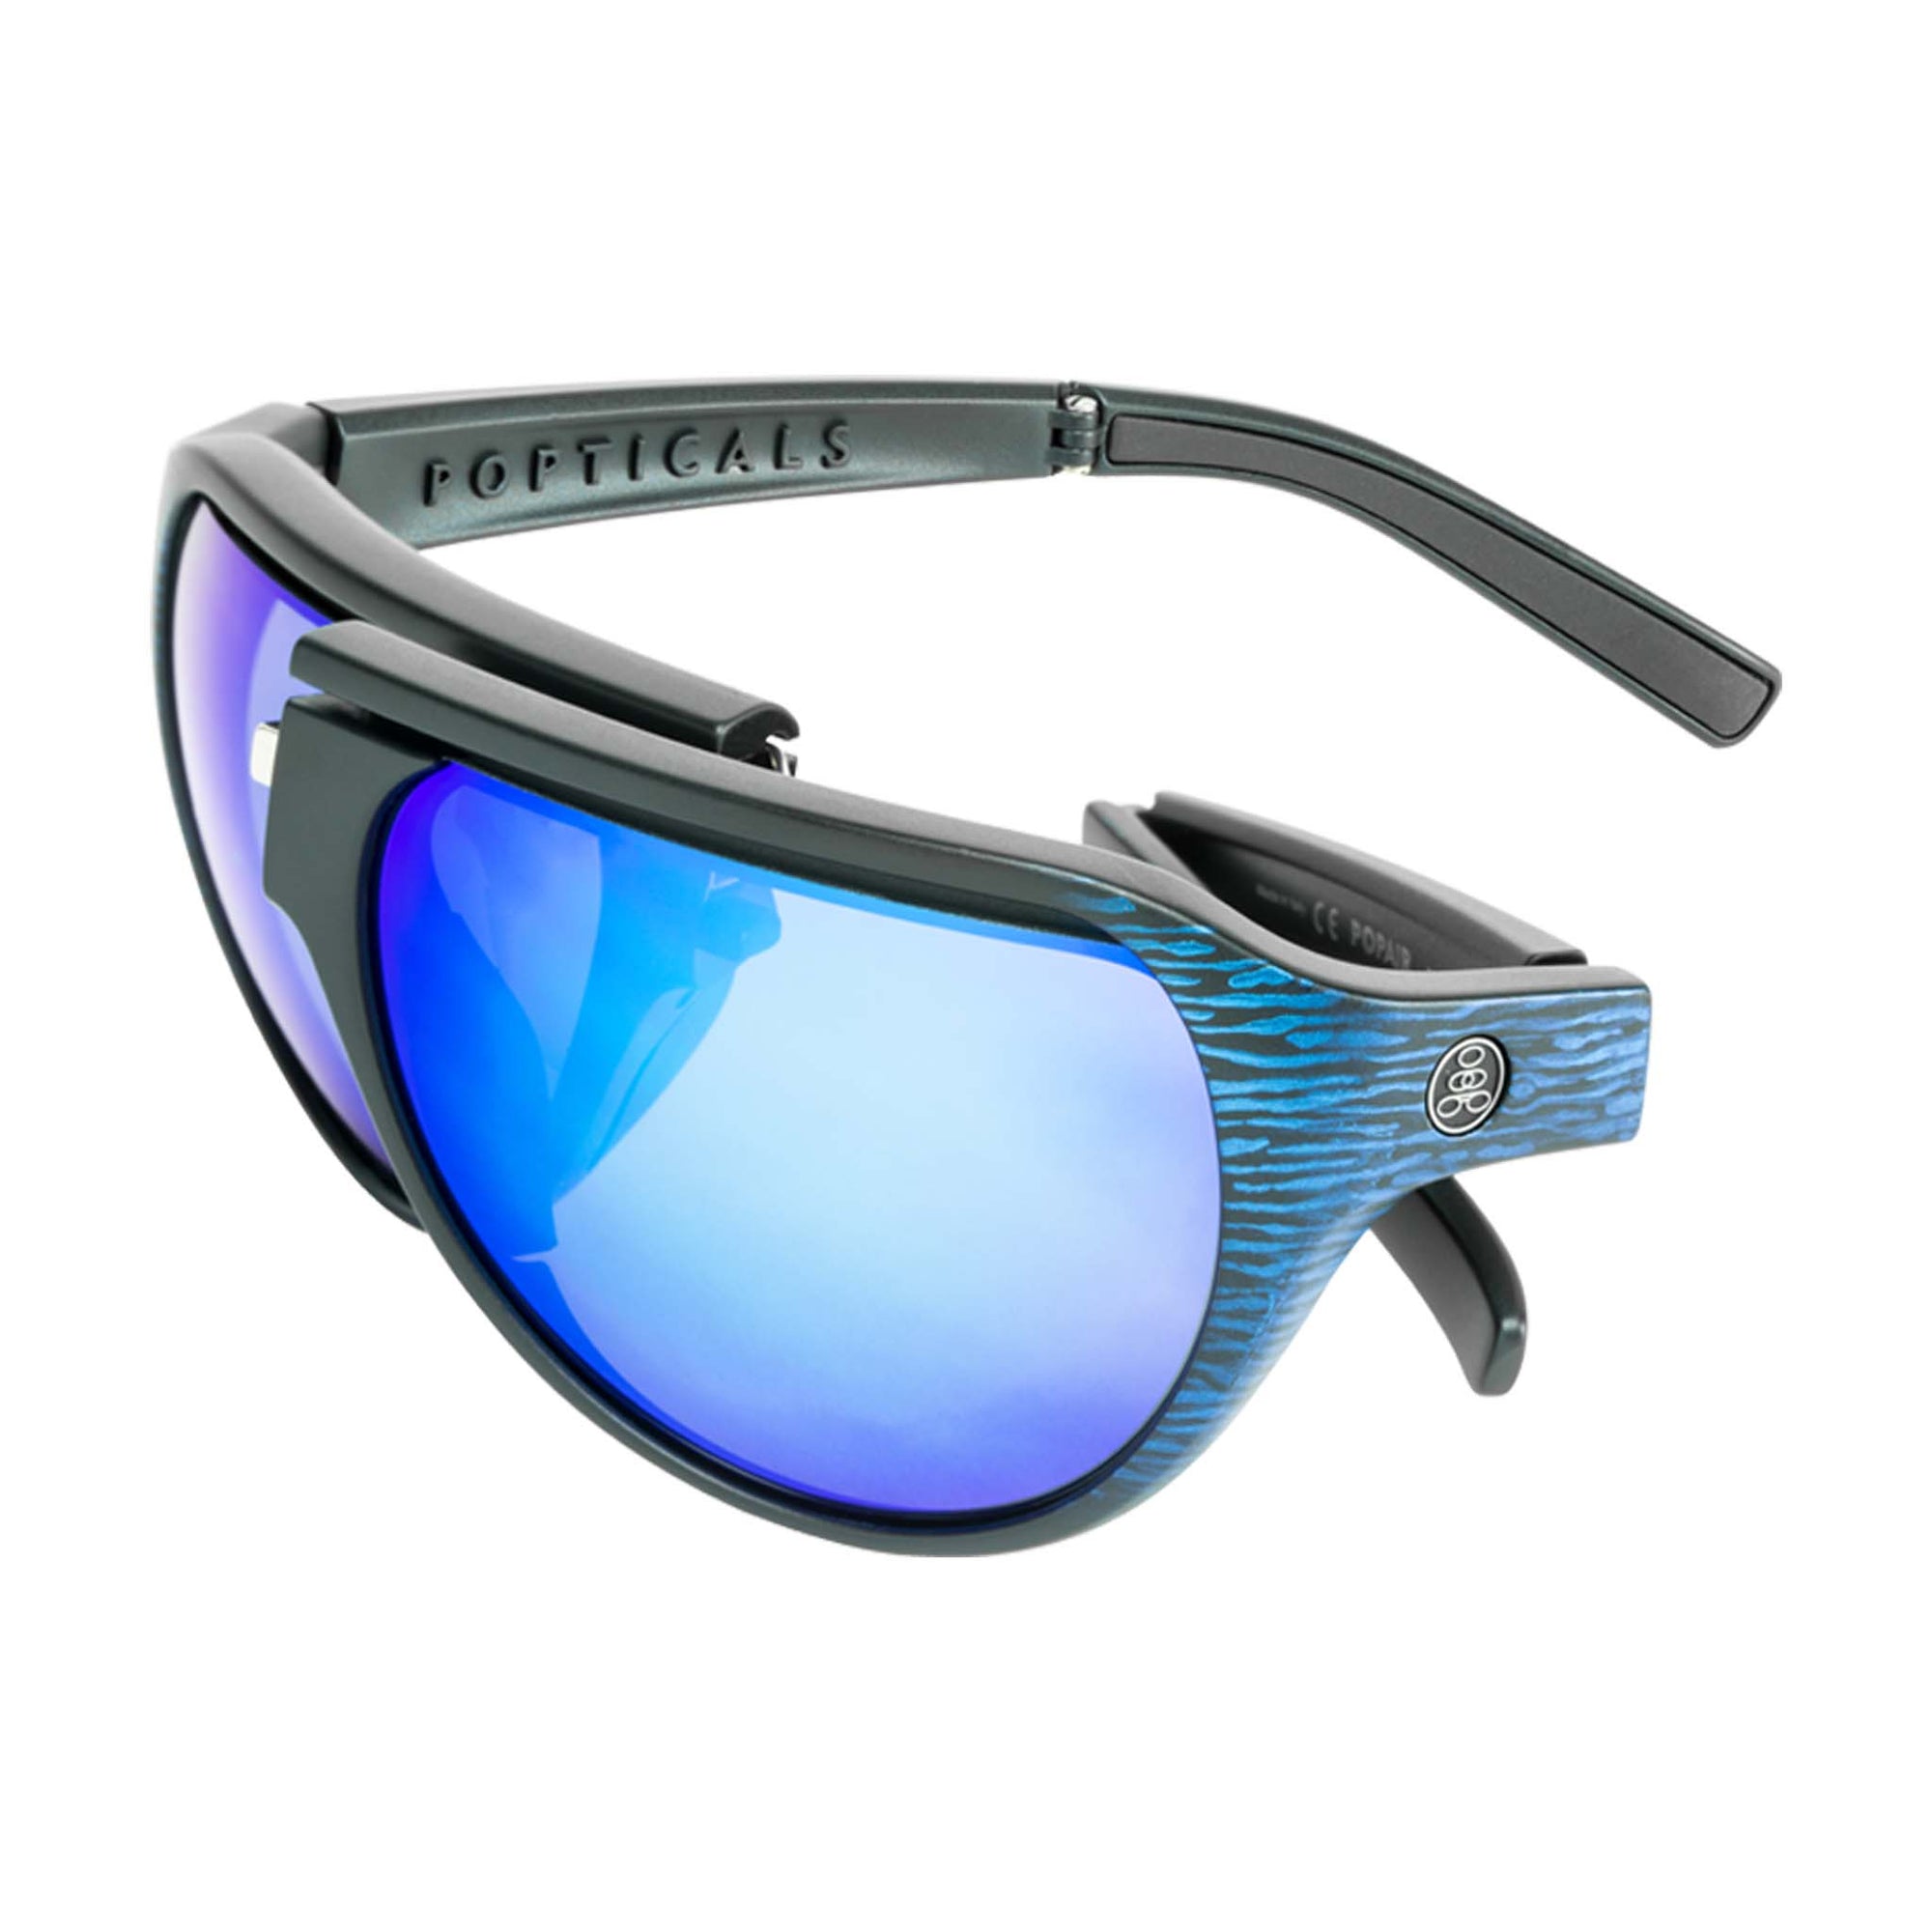 Popticals, Premium Compact Sunglasses, PopAir, 300010-EUUN, Polarized Sunglasses, Matte Blue/Black Wood Grain Frame, Blue Mirror Lenses, Glam View